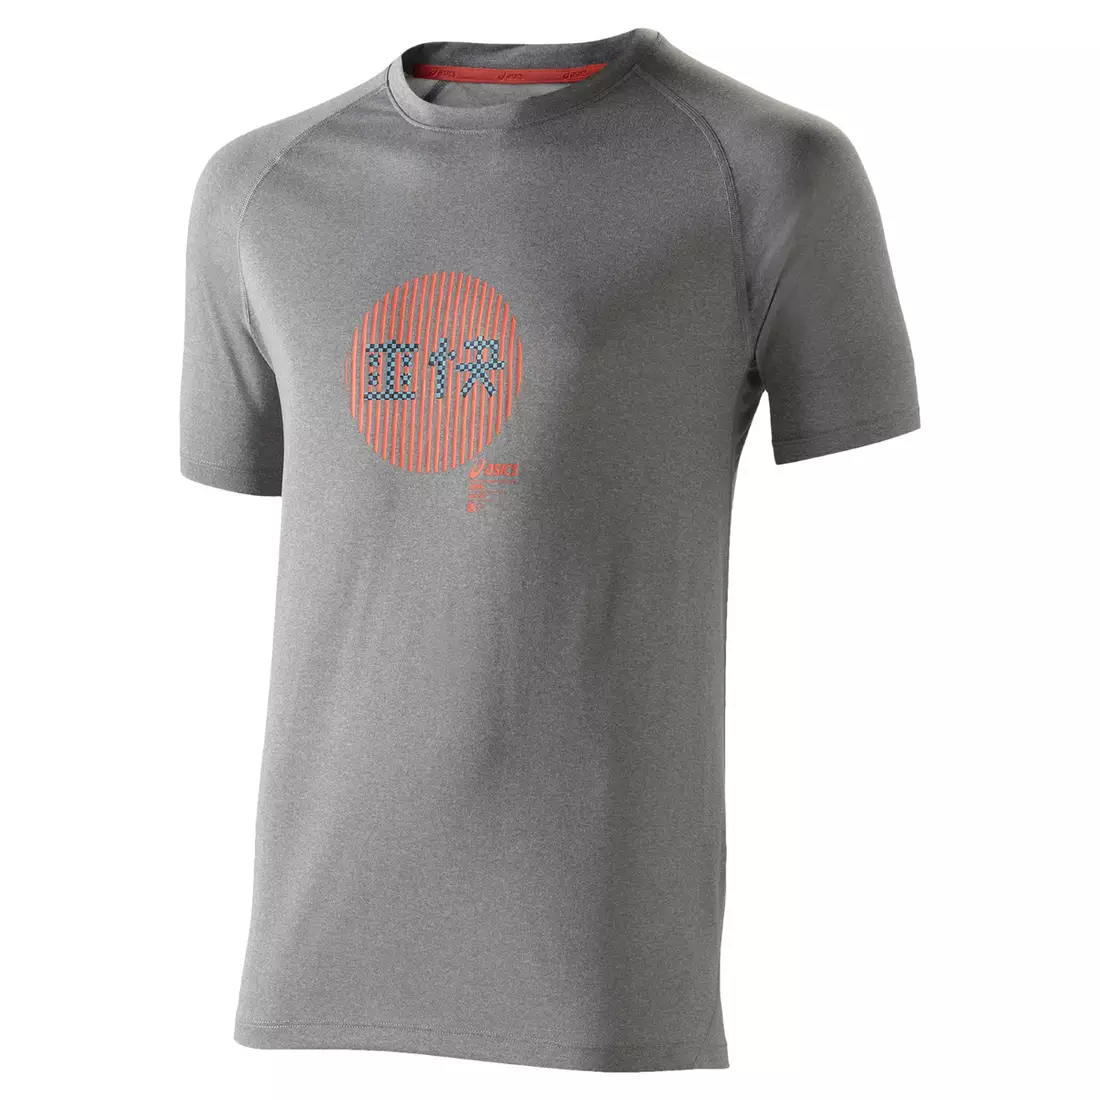 ASICS 110519-0714 SOUKAI GRAPHIC TOP - men's running T-shirt, color: Gray